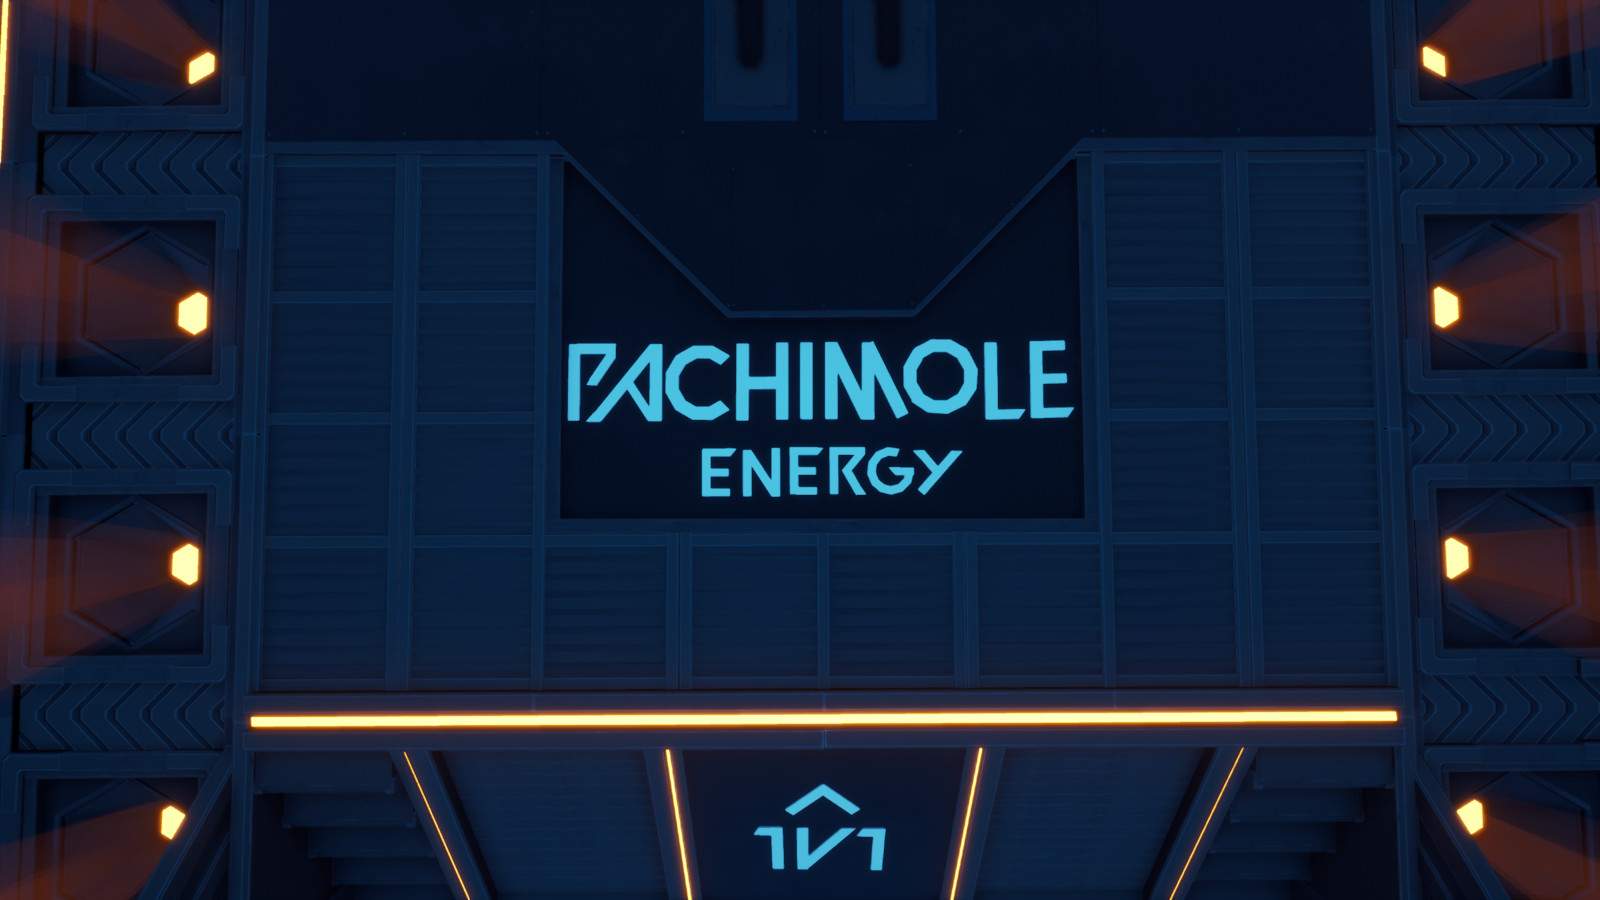 PACHIMOLE ENERGY 1V1V1V1V1V1V1...